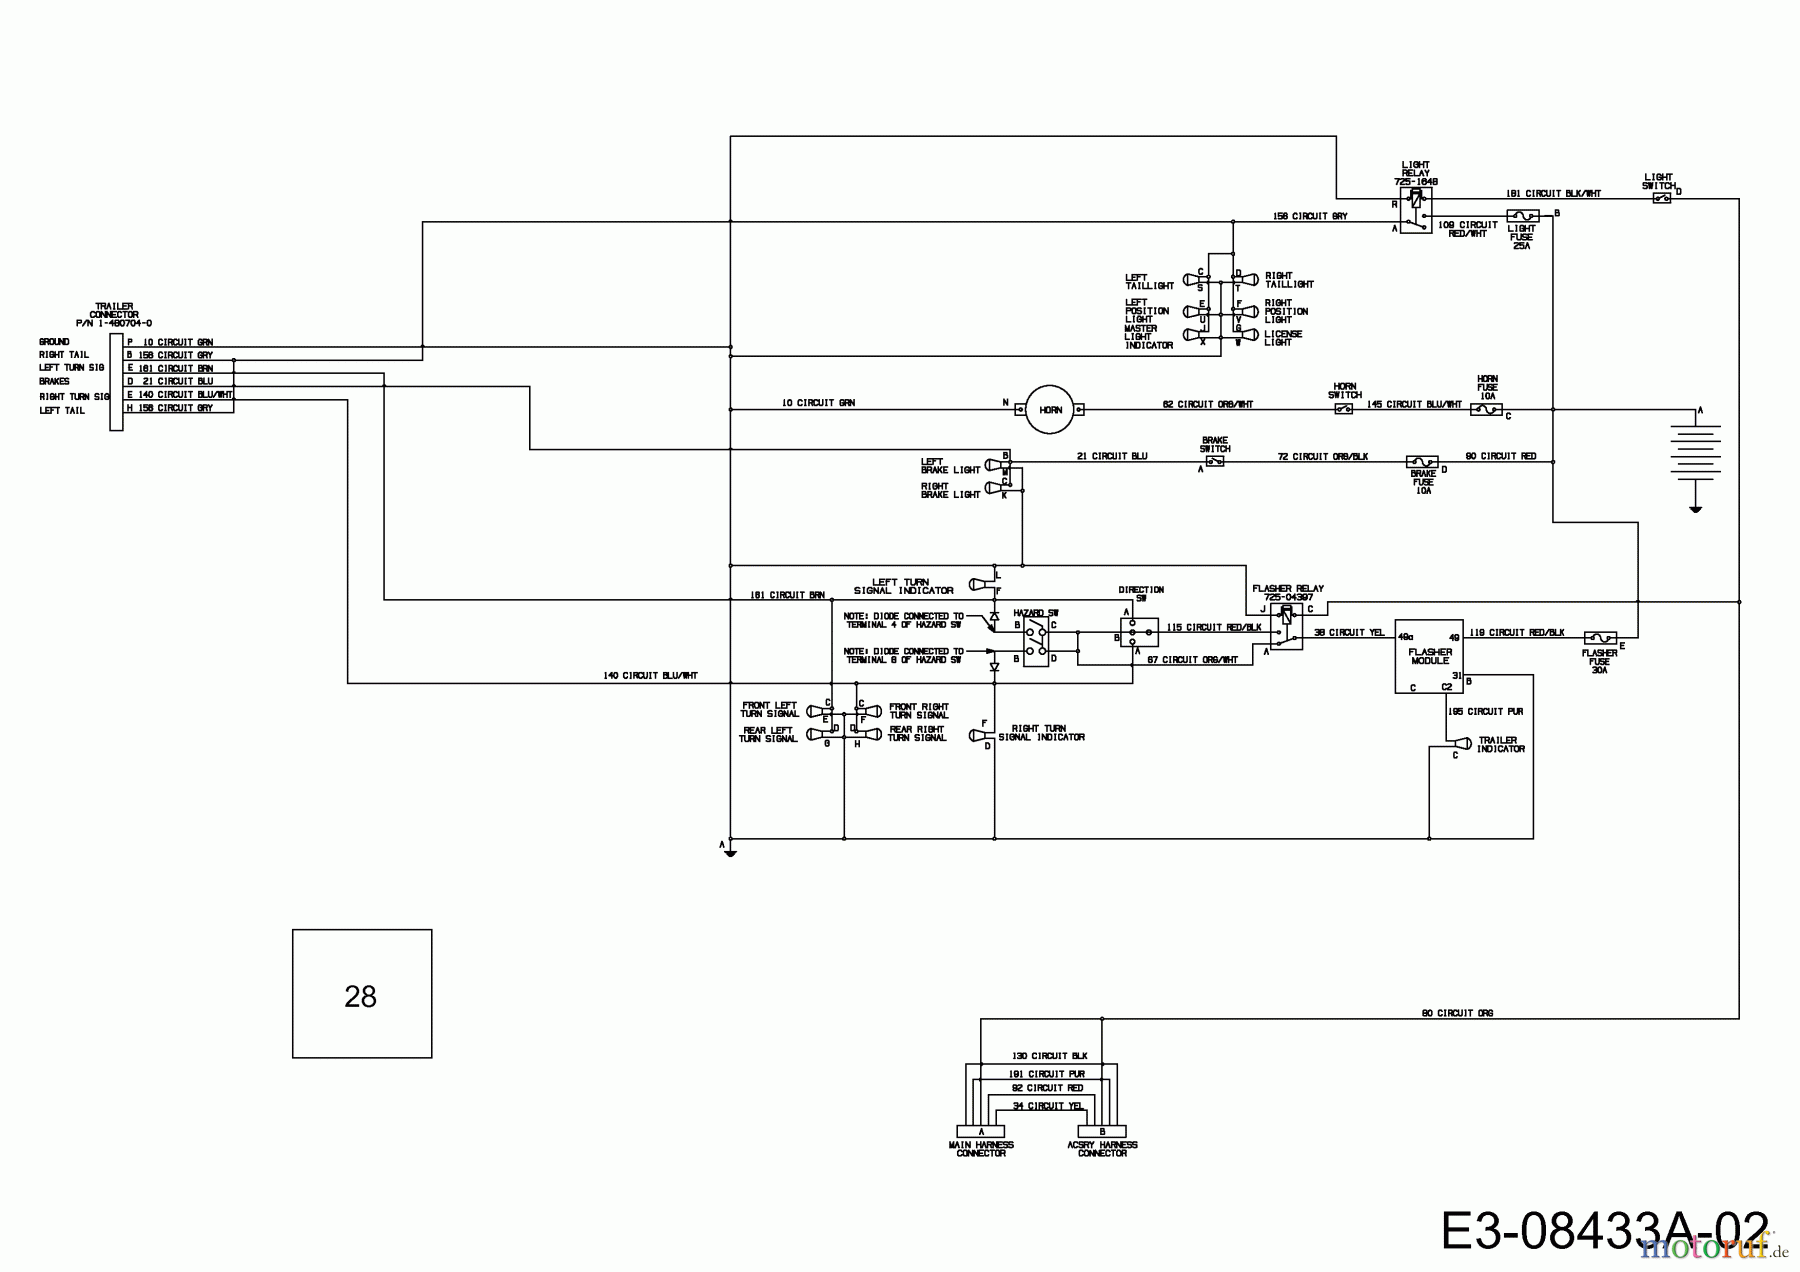  Cub Cadet Utility Vehicle Volunteer 37AK466D603  (2014) Wiring diagram